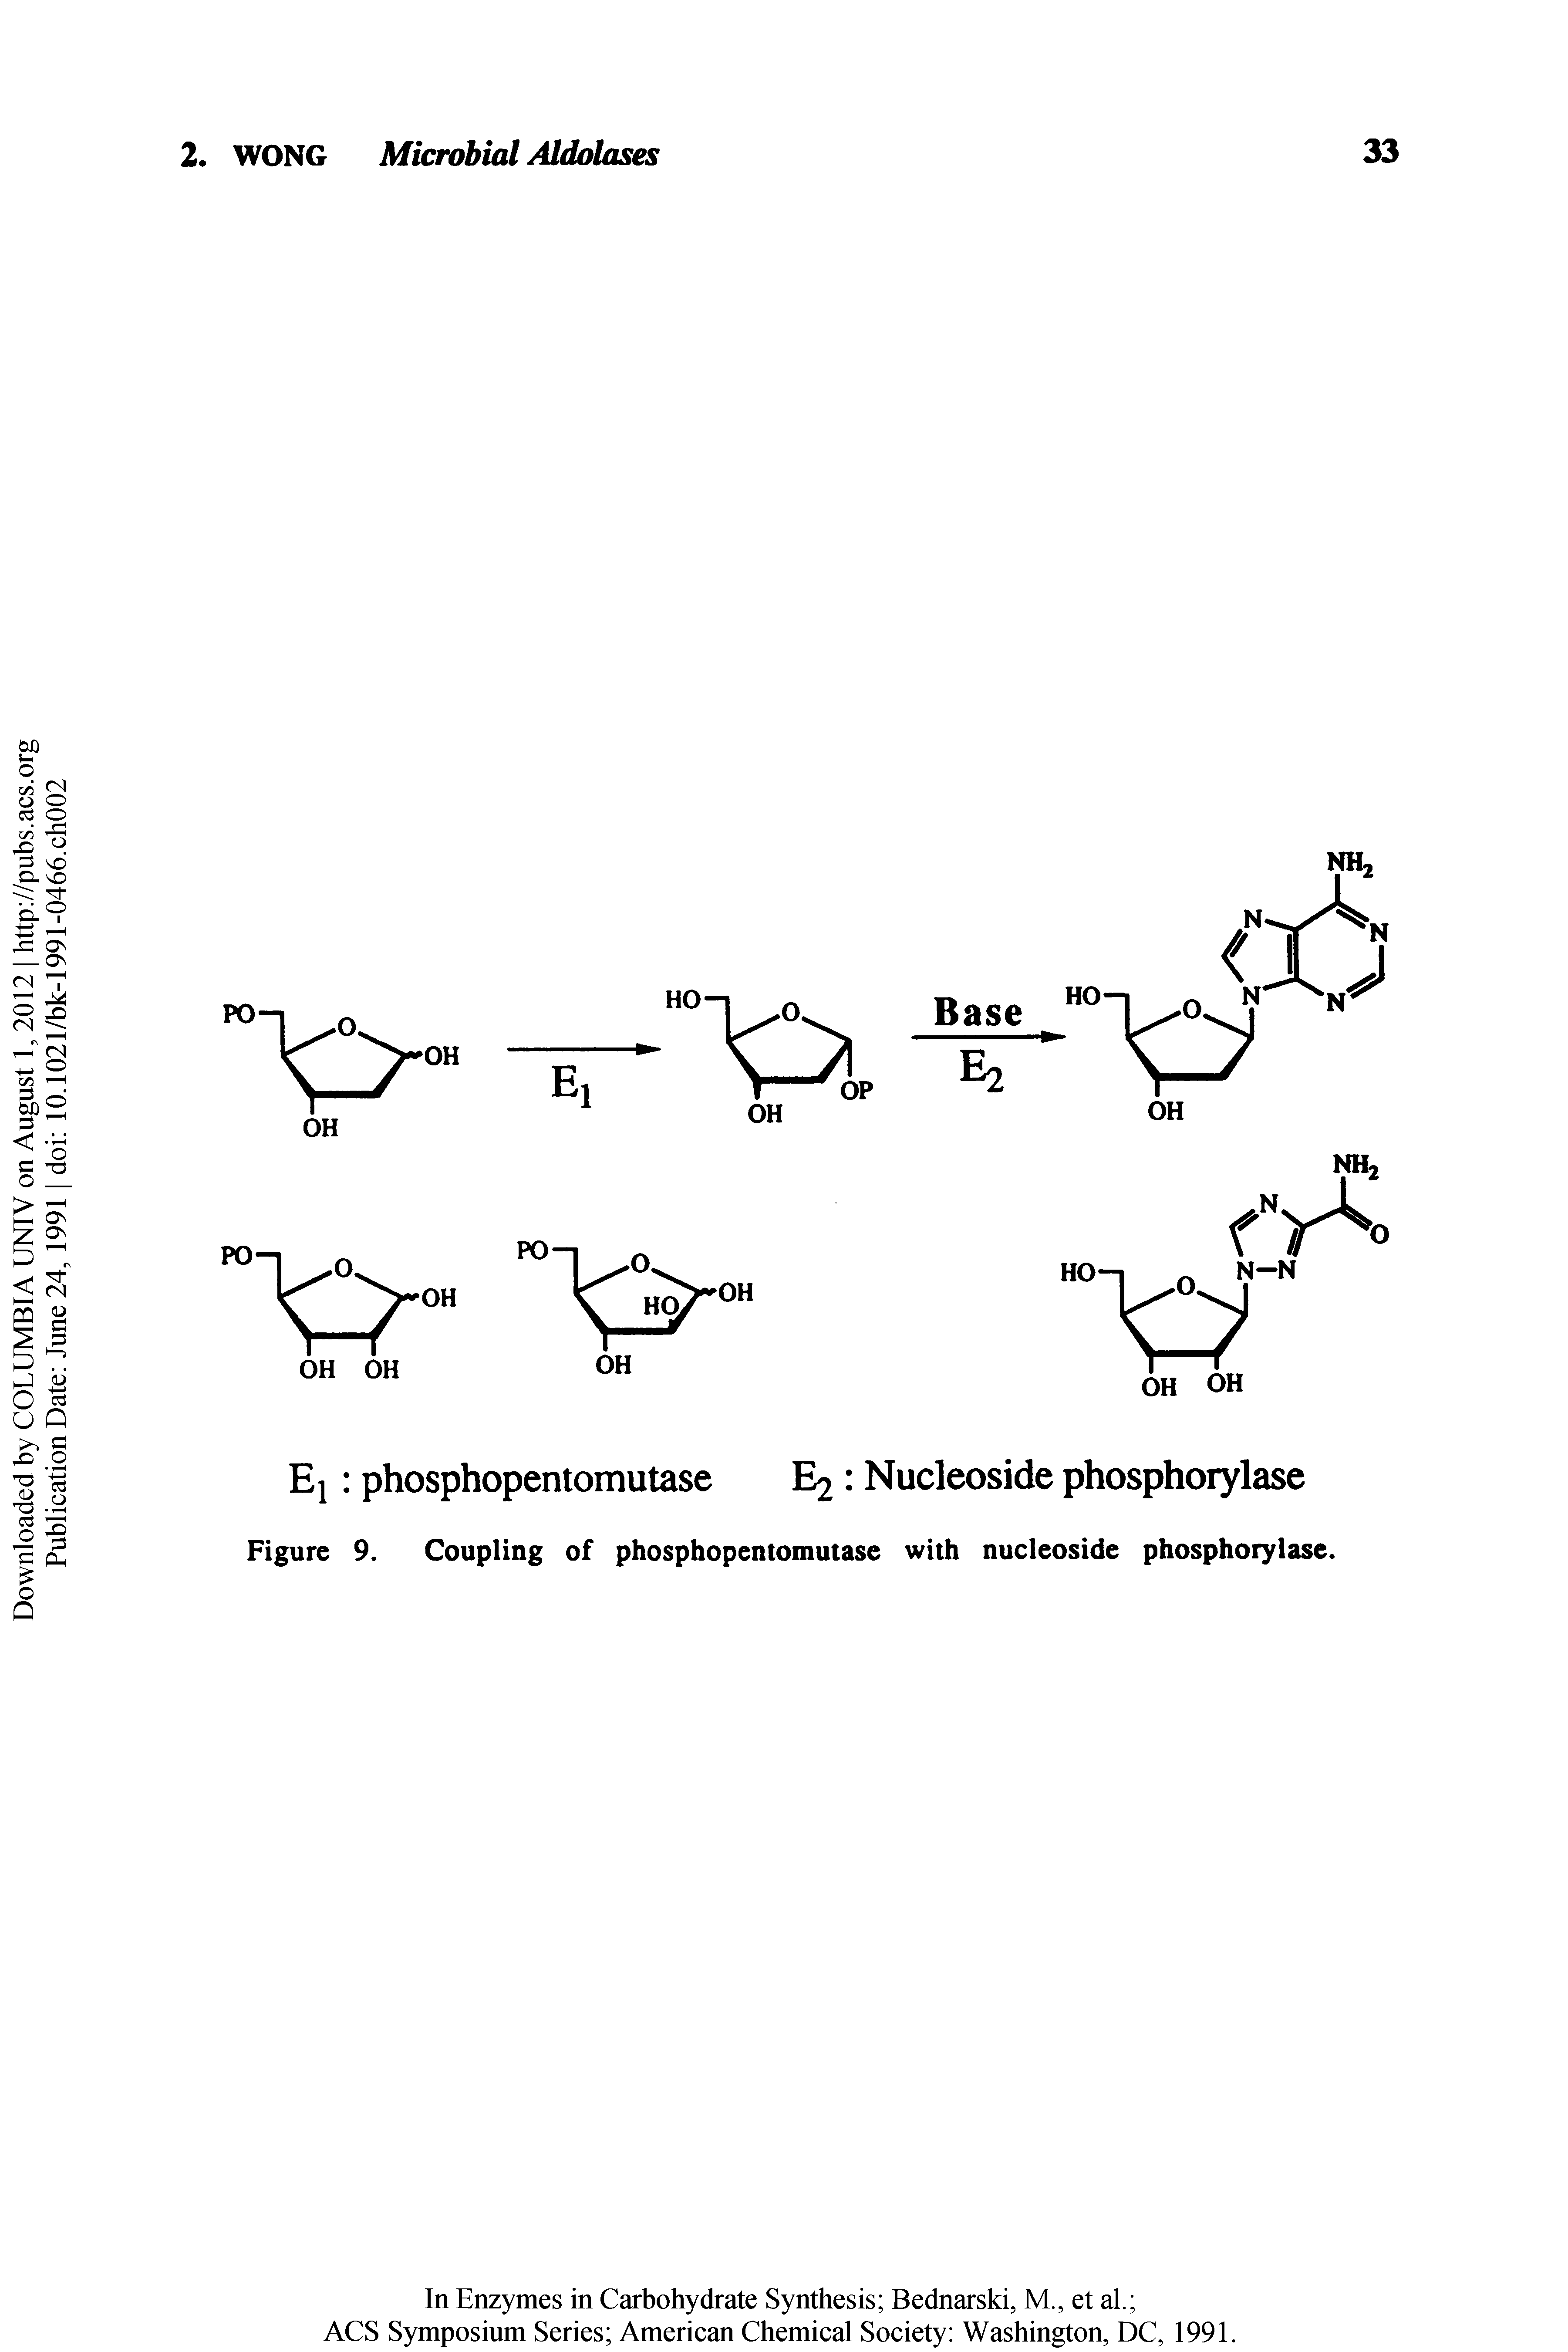 Figure 9. Coupling of phosphopentomutase with nucleoside phosphorylase.